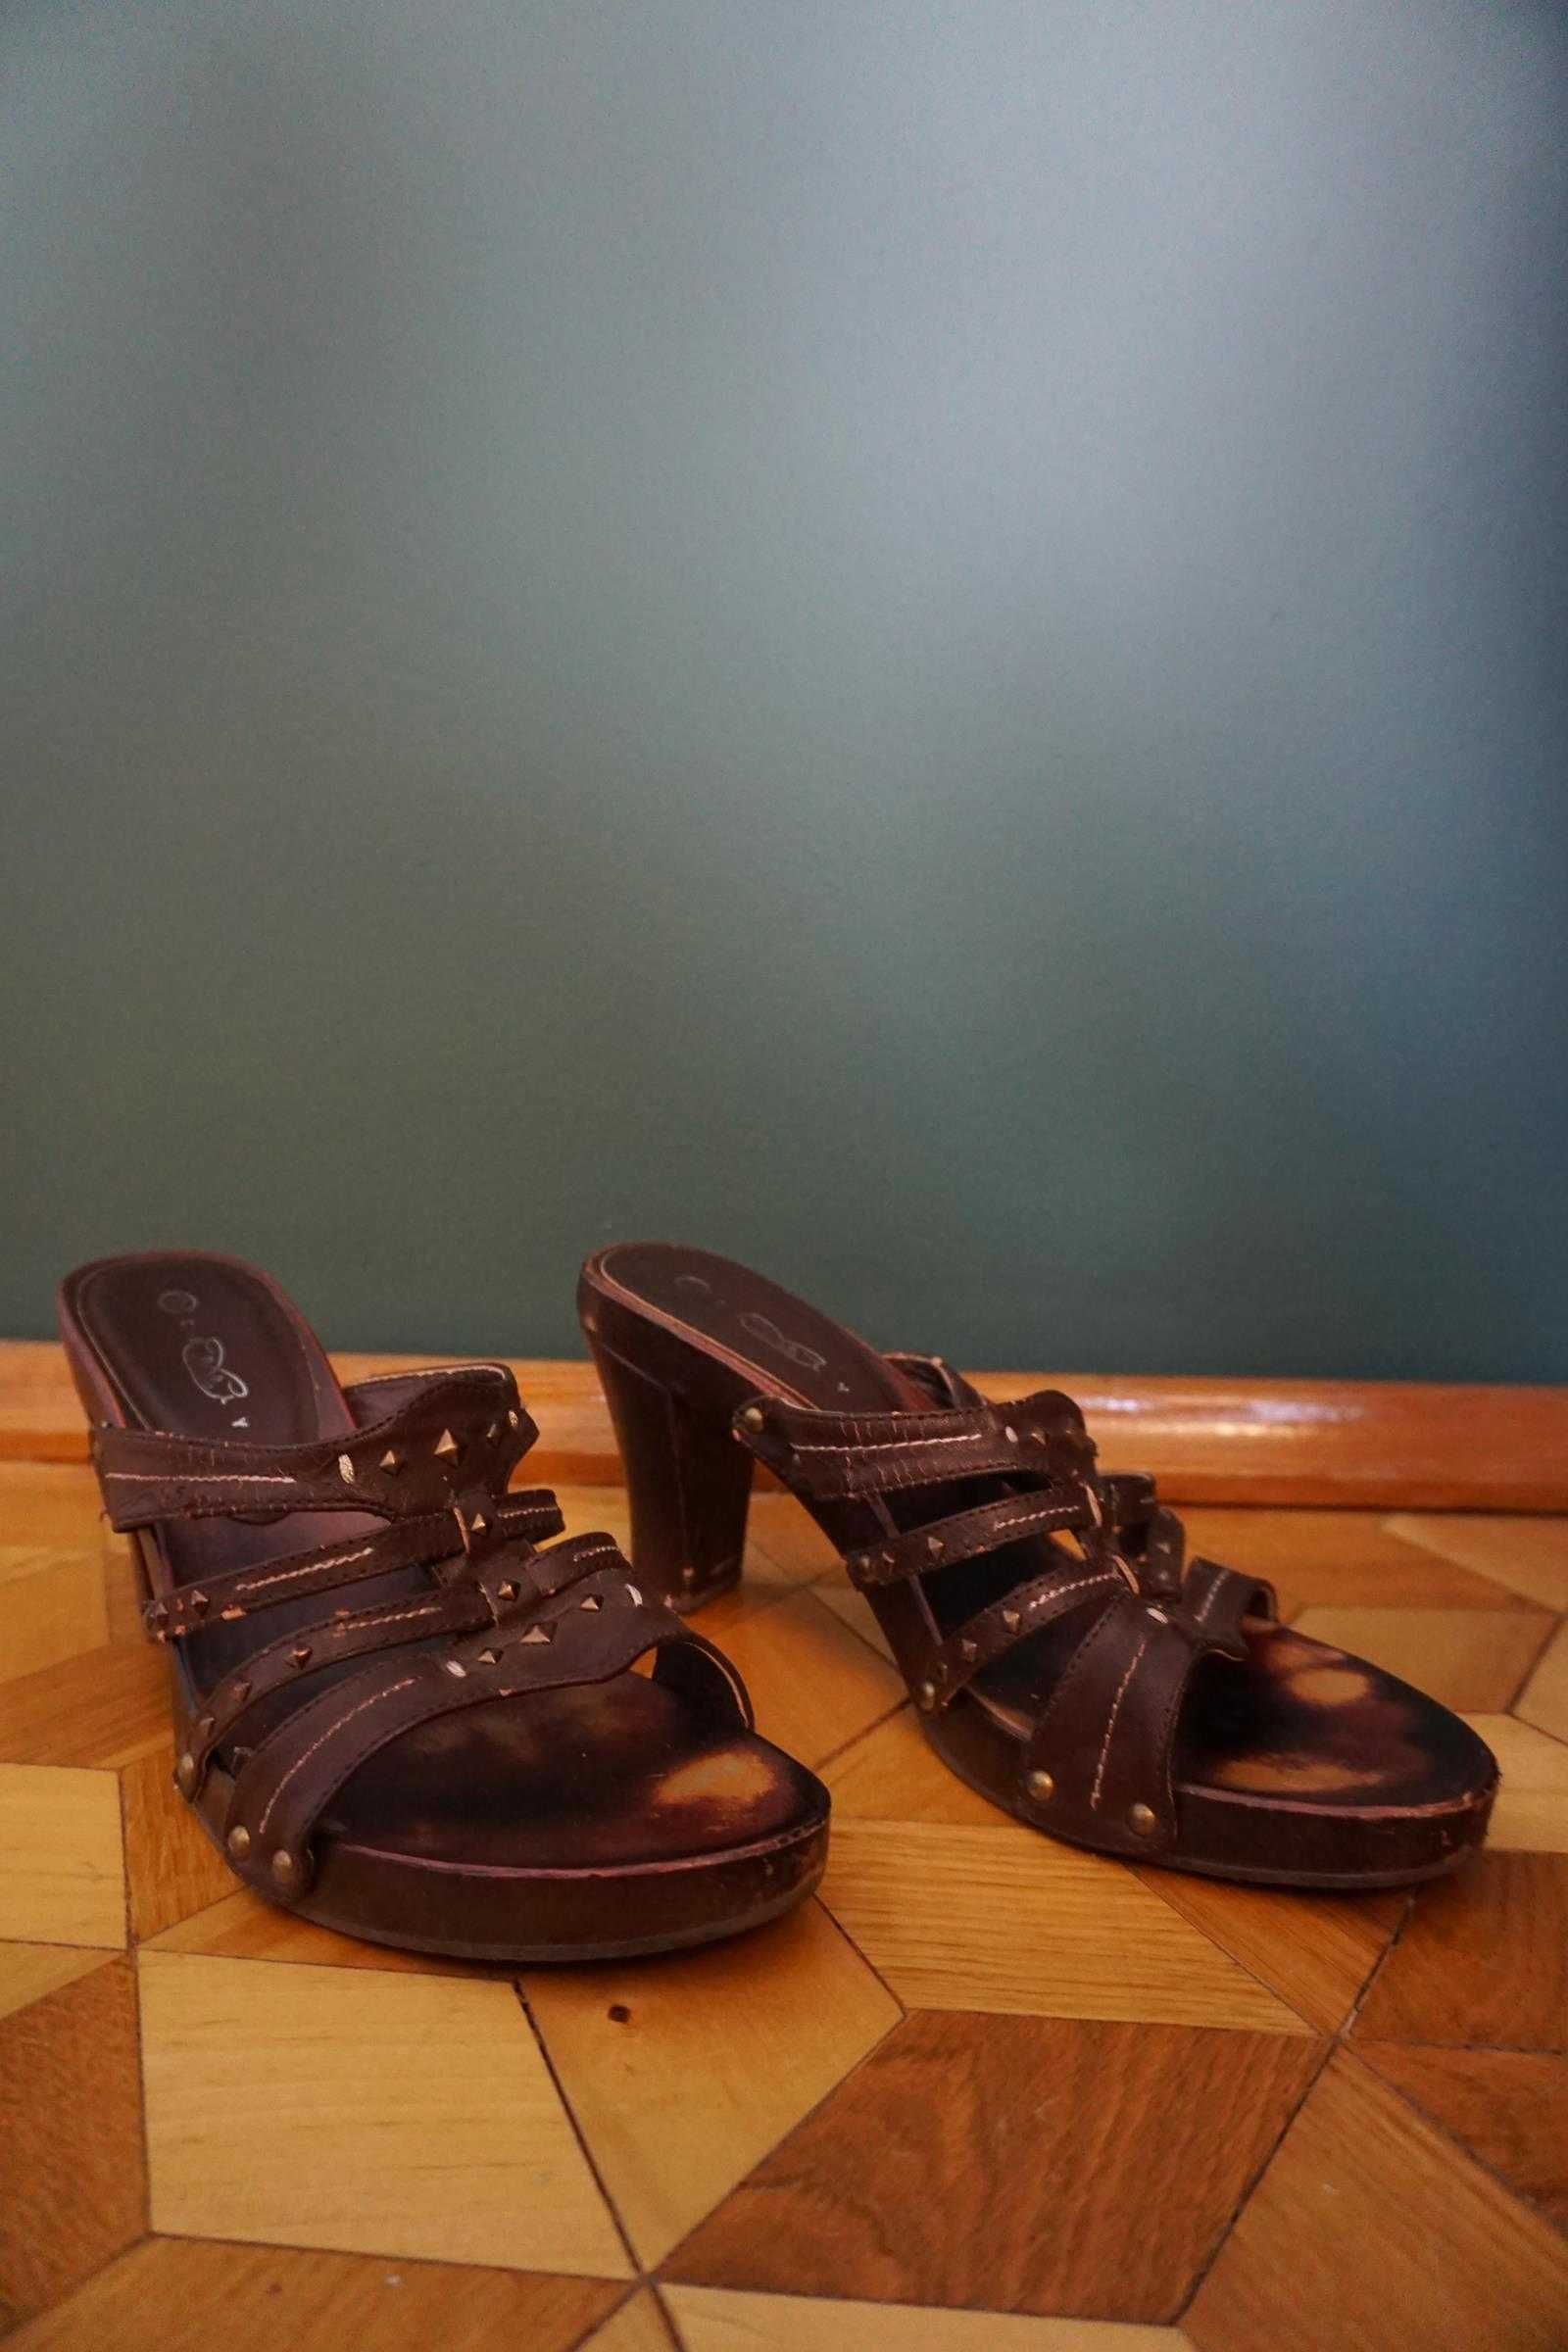 Buty klapki sandały 40 skórzane na obcasie klocku grubym skóra brązowe